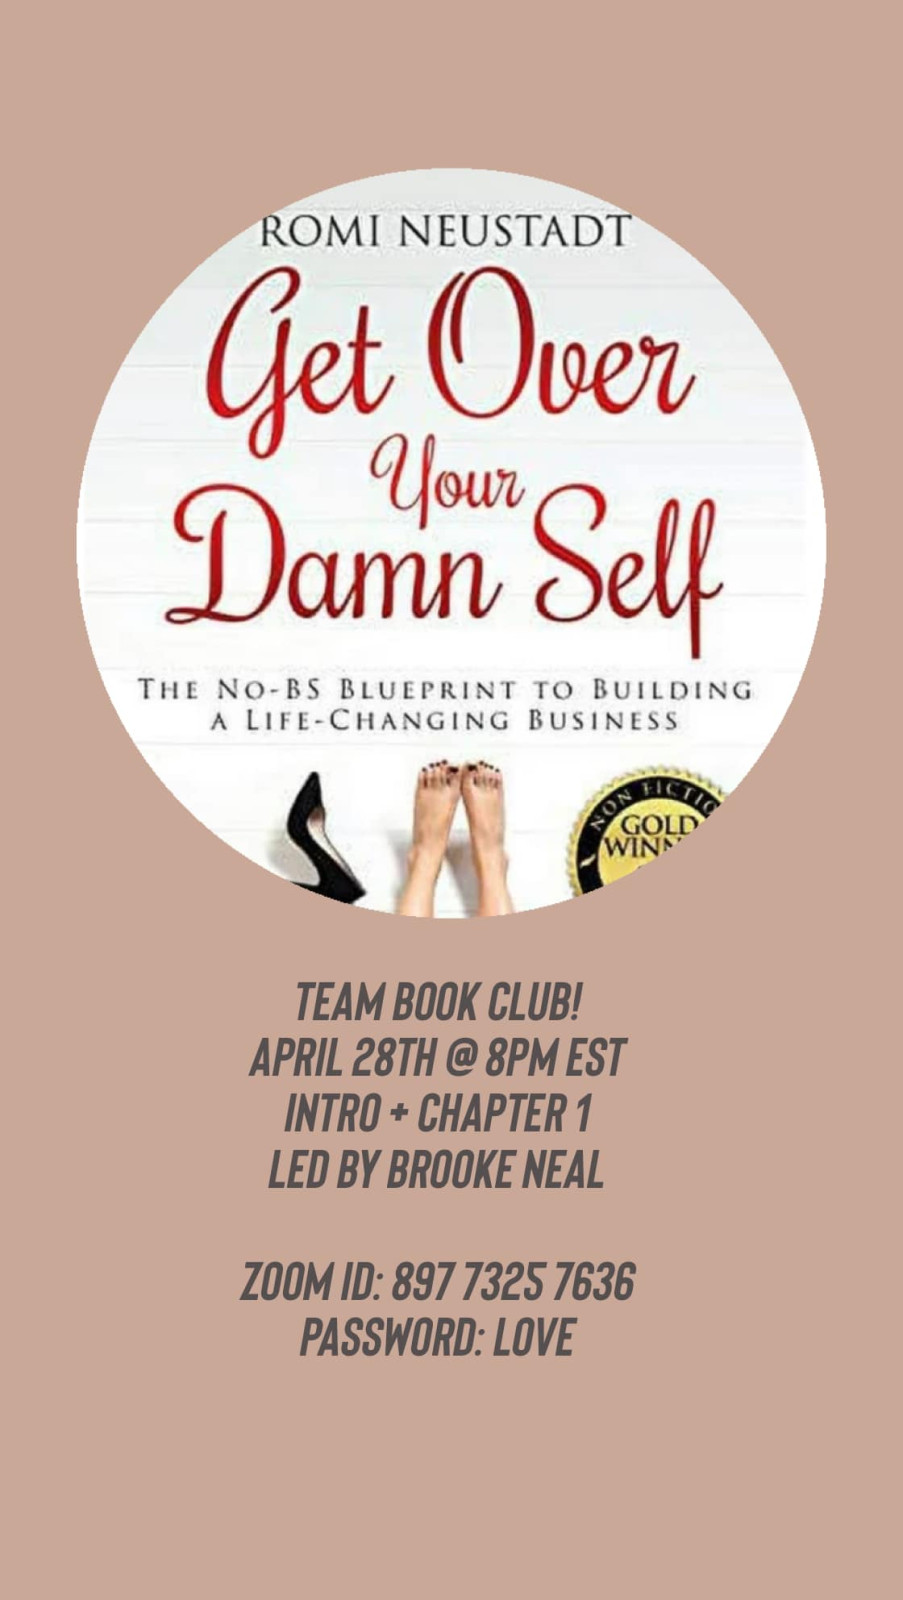 Love & Leadership Book Club - "Get Over Your Damn Self"